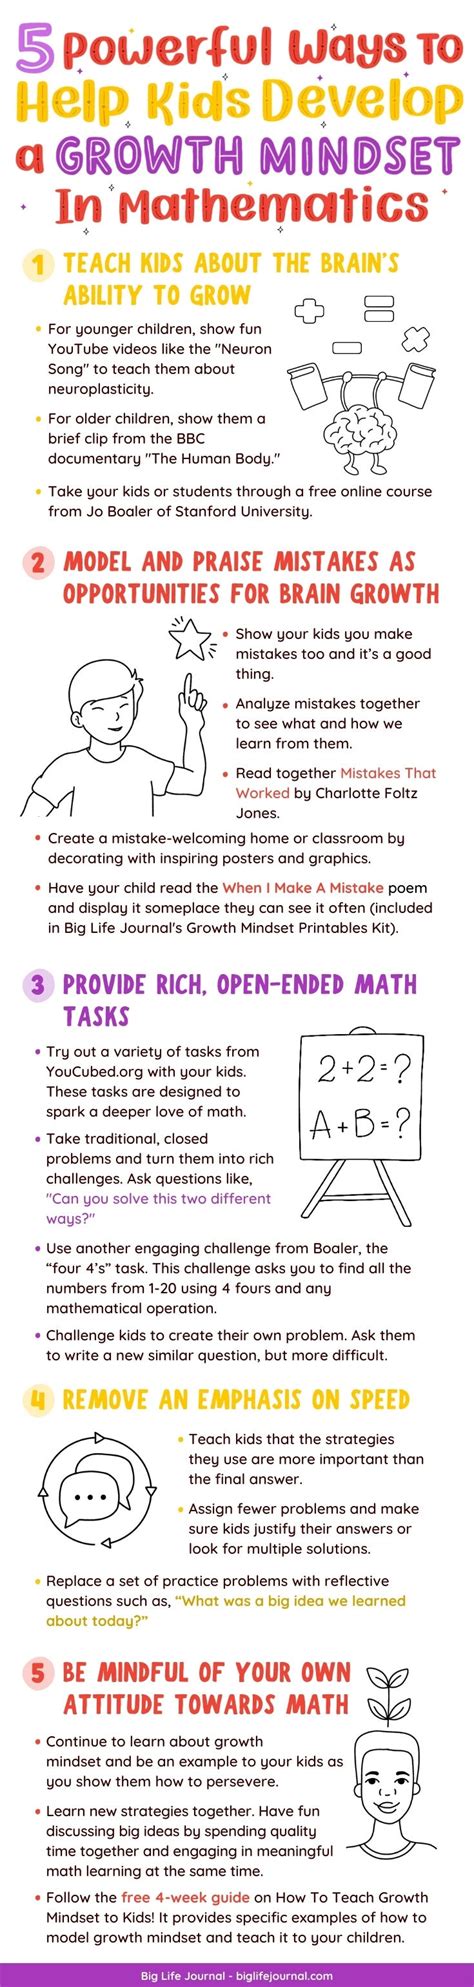 5 Powerful Ways To Help Kids Develop A Growth Mindset In Mathematics